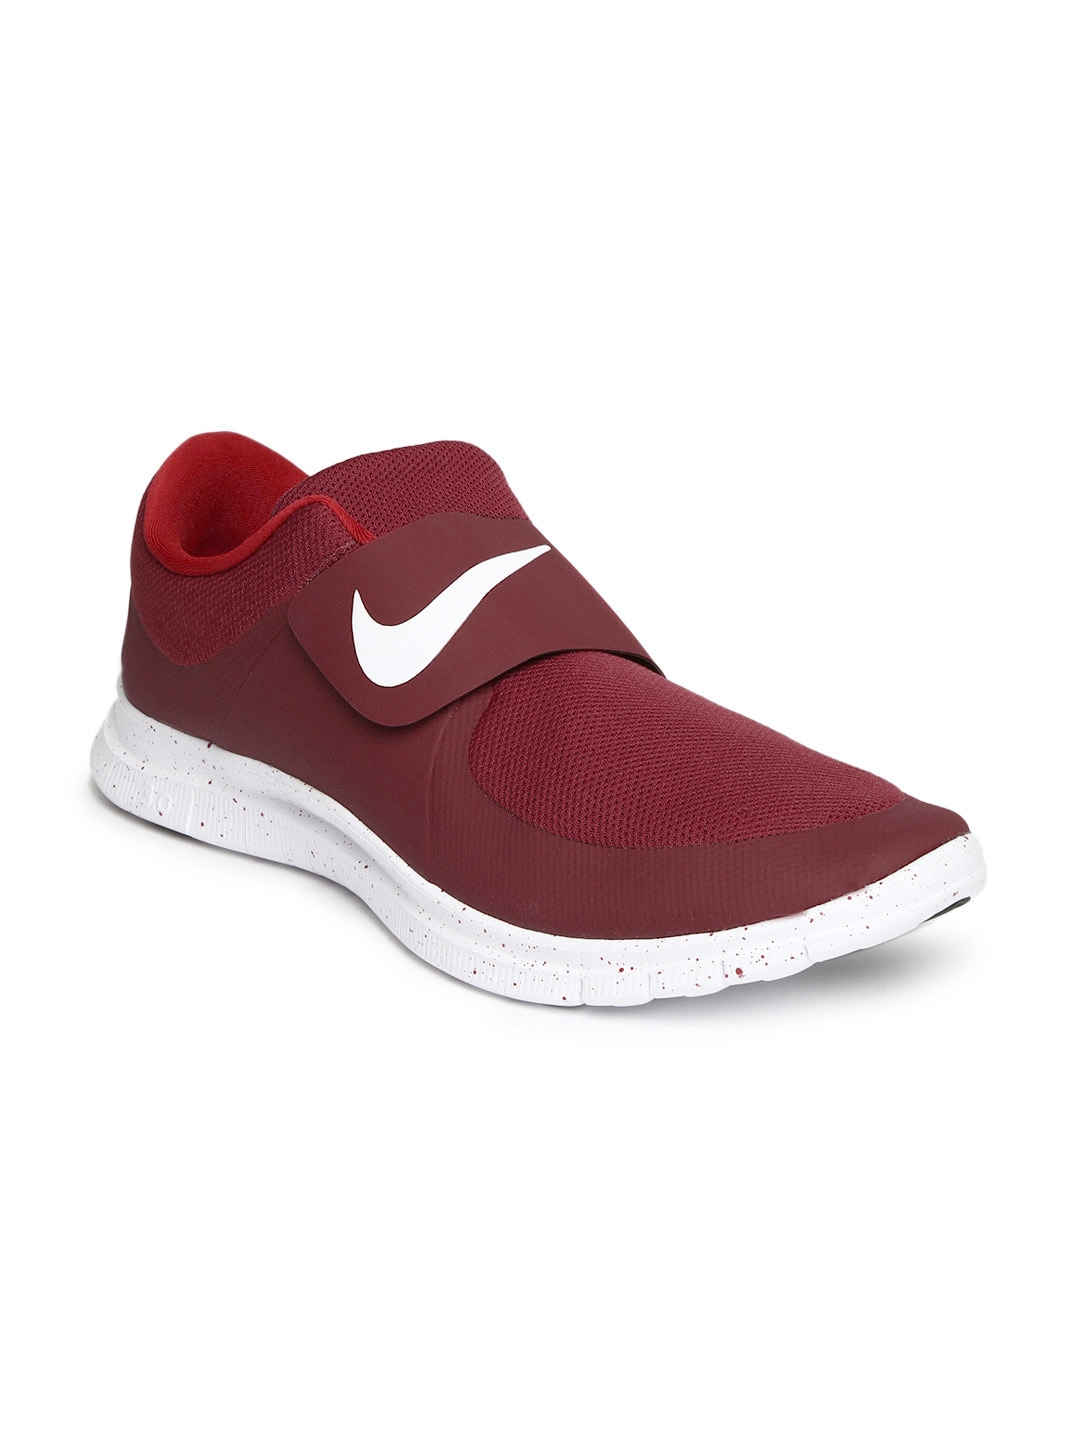 legación Materialismo Racional Buy Nike Men Maroon Nike Free Socfly Running Shoes - Sports Shoes for Men  857298 | Myntra